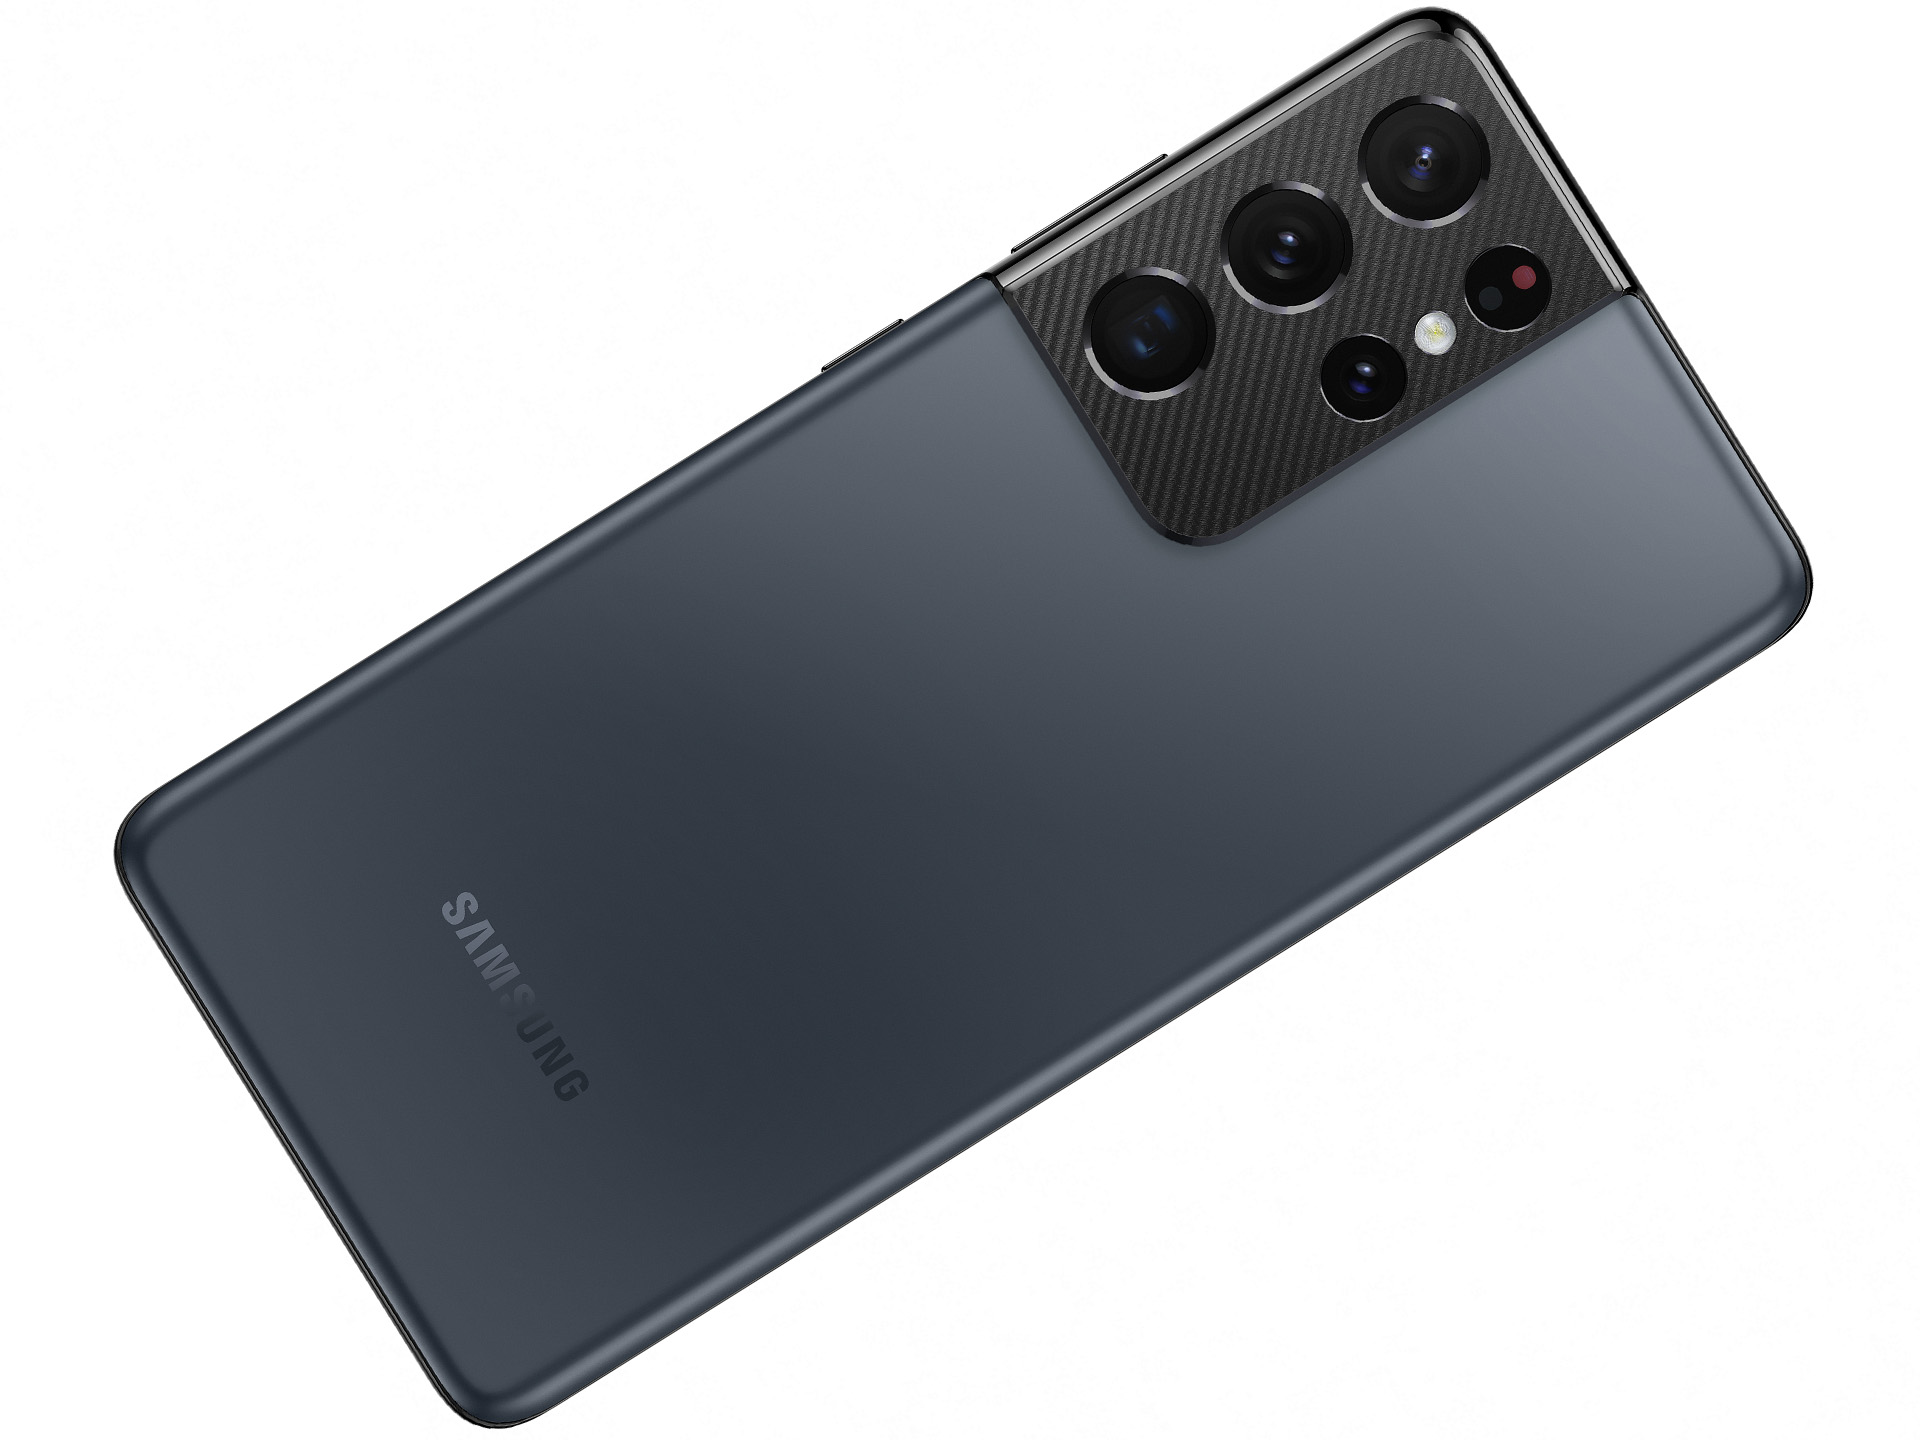 Samsung S21 Ultra 256GB – Signola